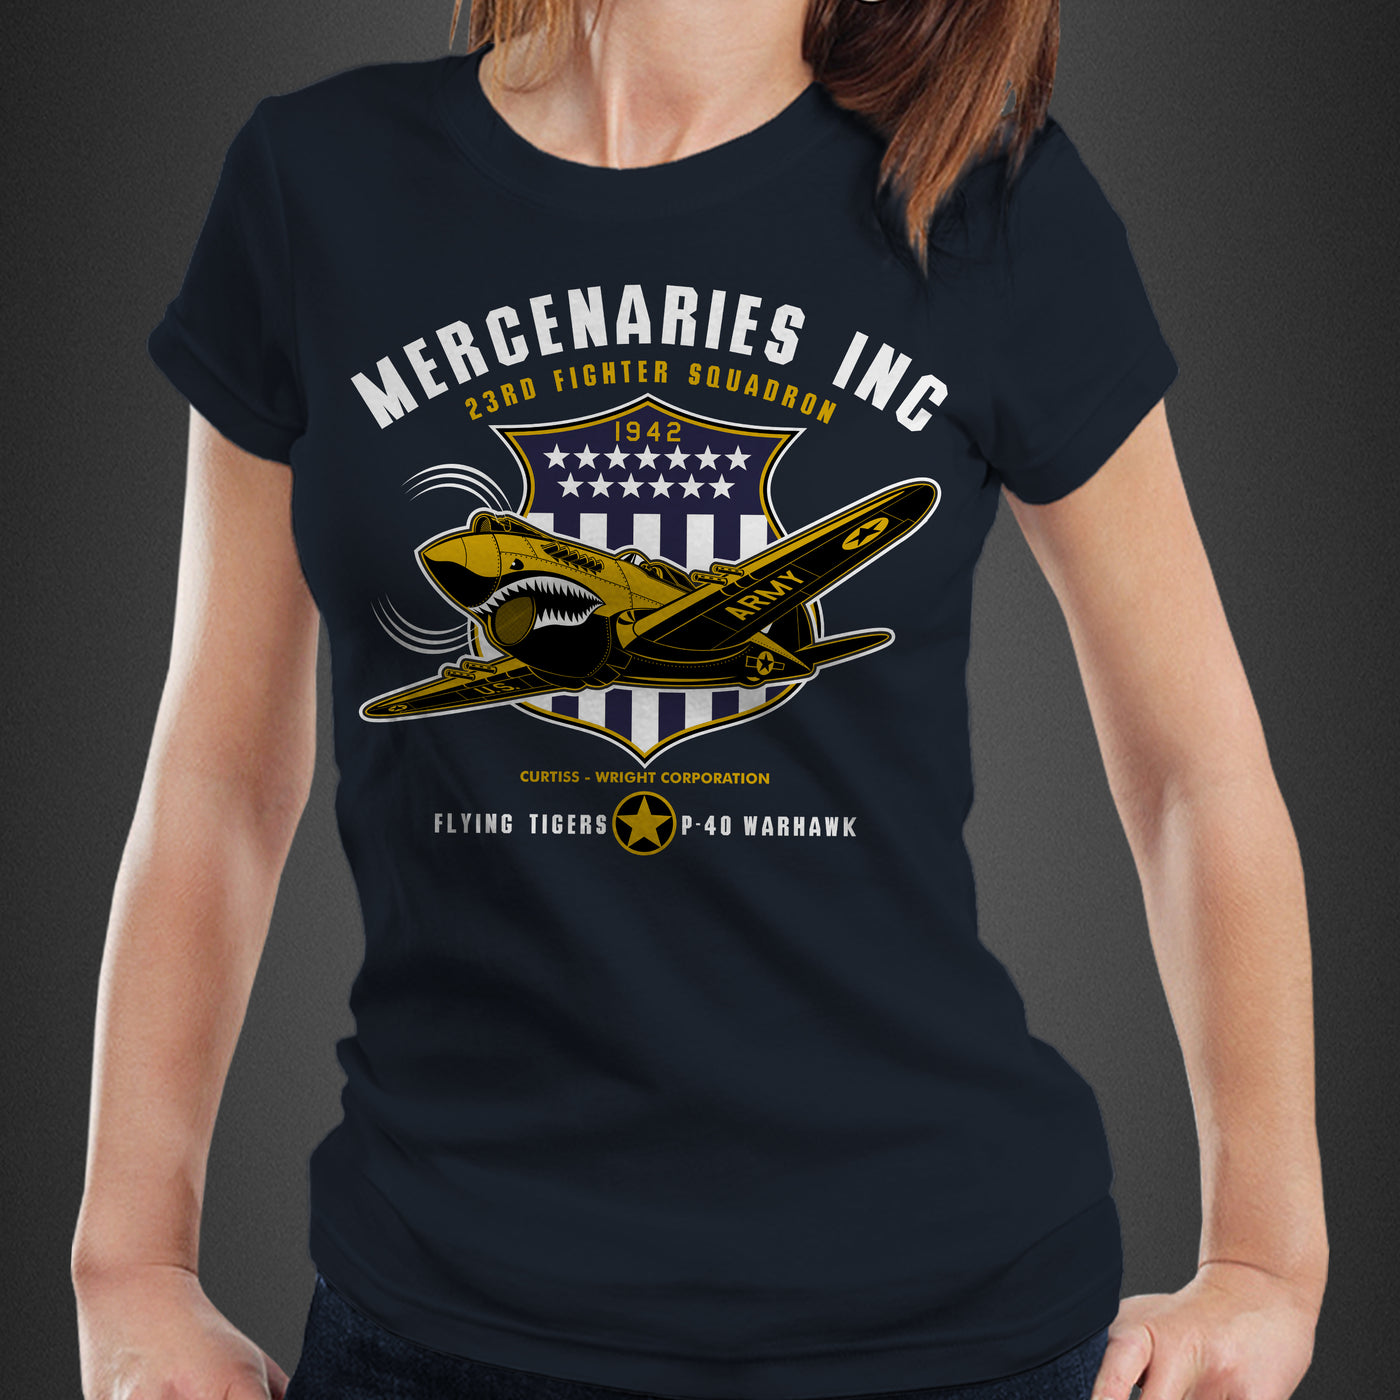 Mercenaries Inc. - NEW - Fem